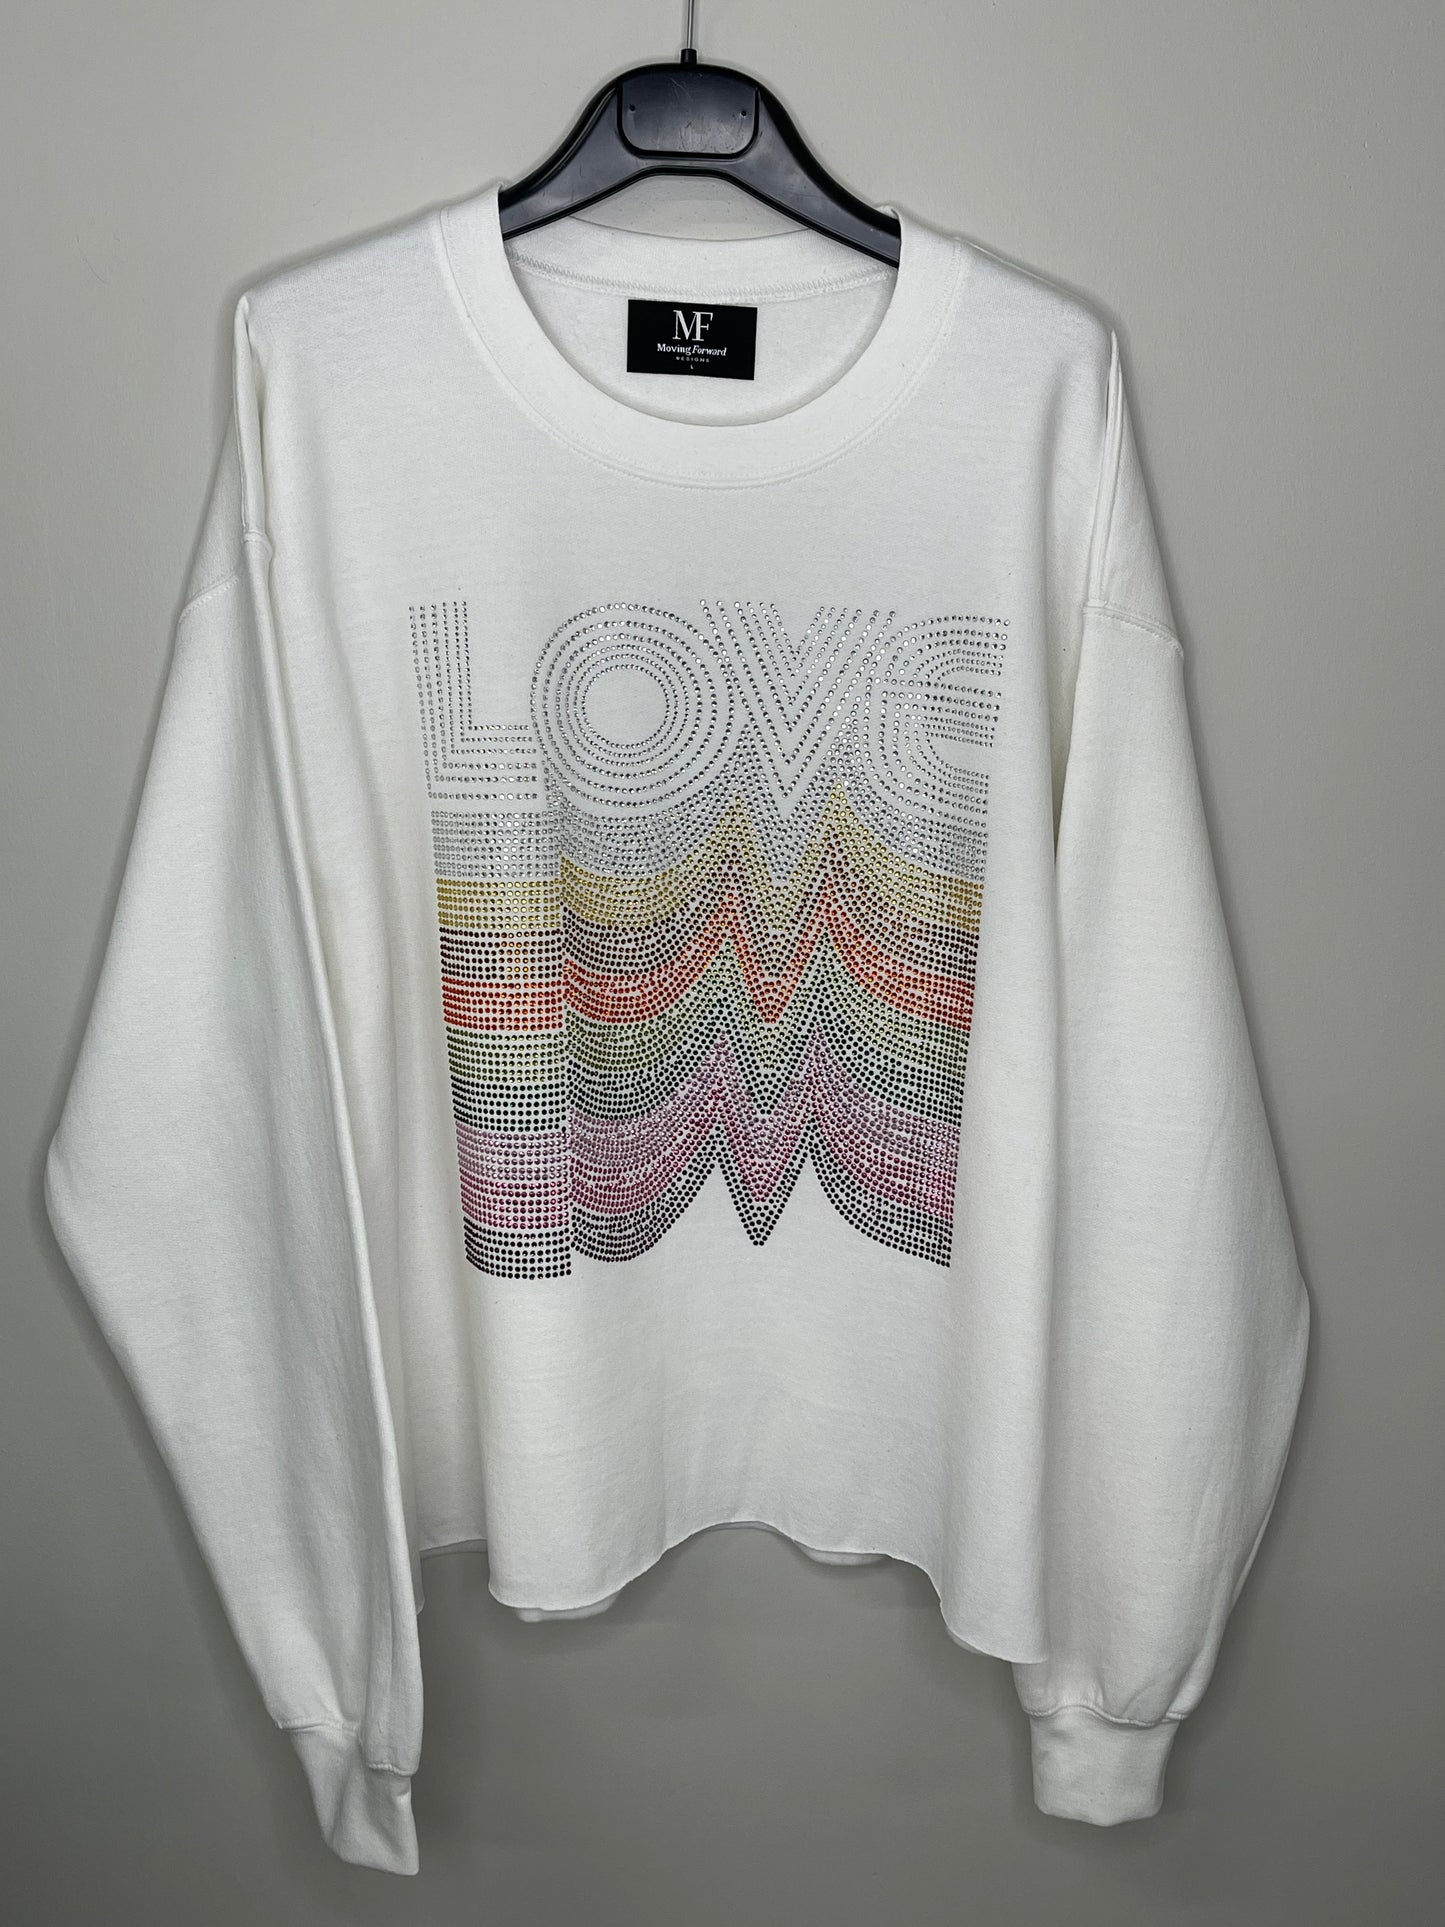 Sweatshirt, Crewneck White, Love Repeater